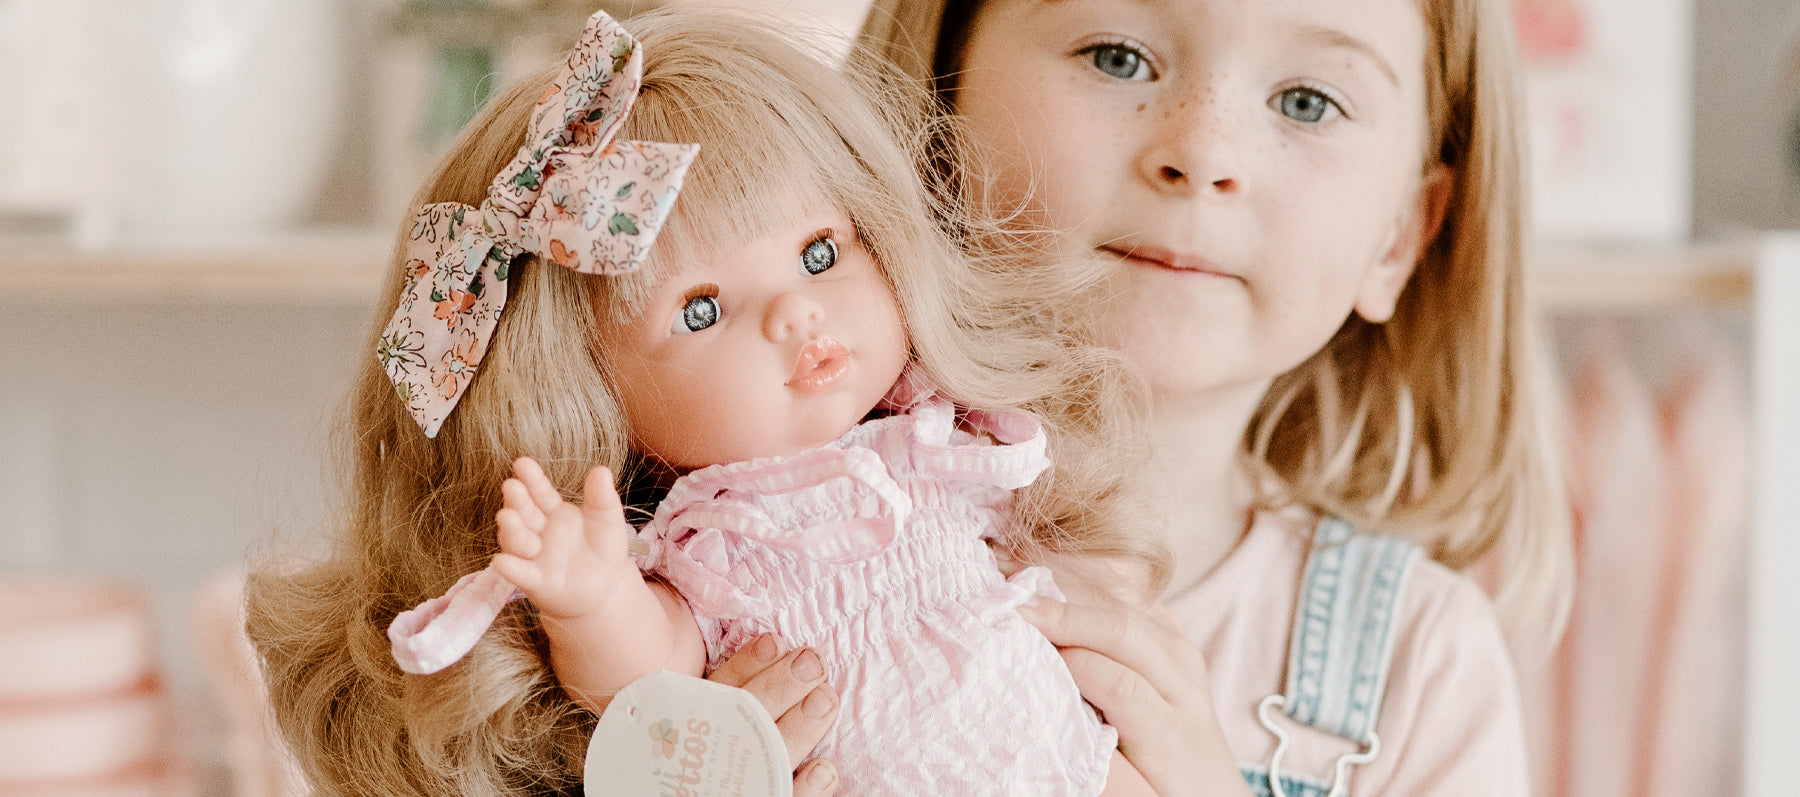 Dolls - Doll Clothes - Doll Toys